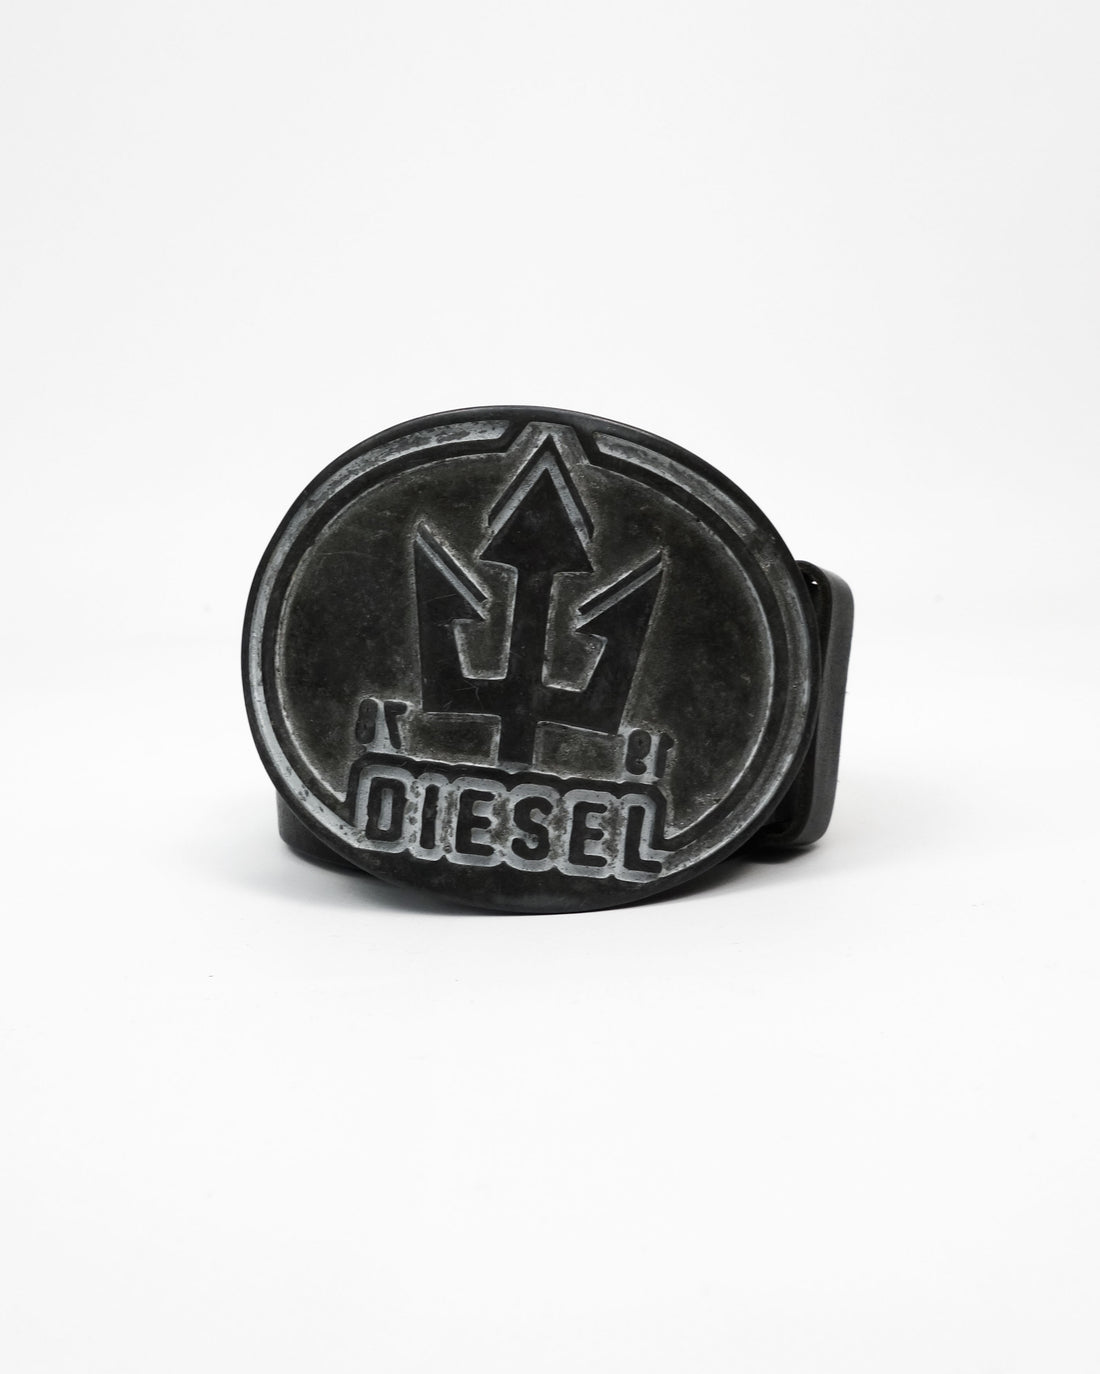 Diesel "Trident" Black Leather Belt 90's